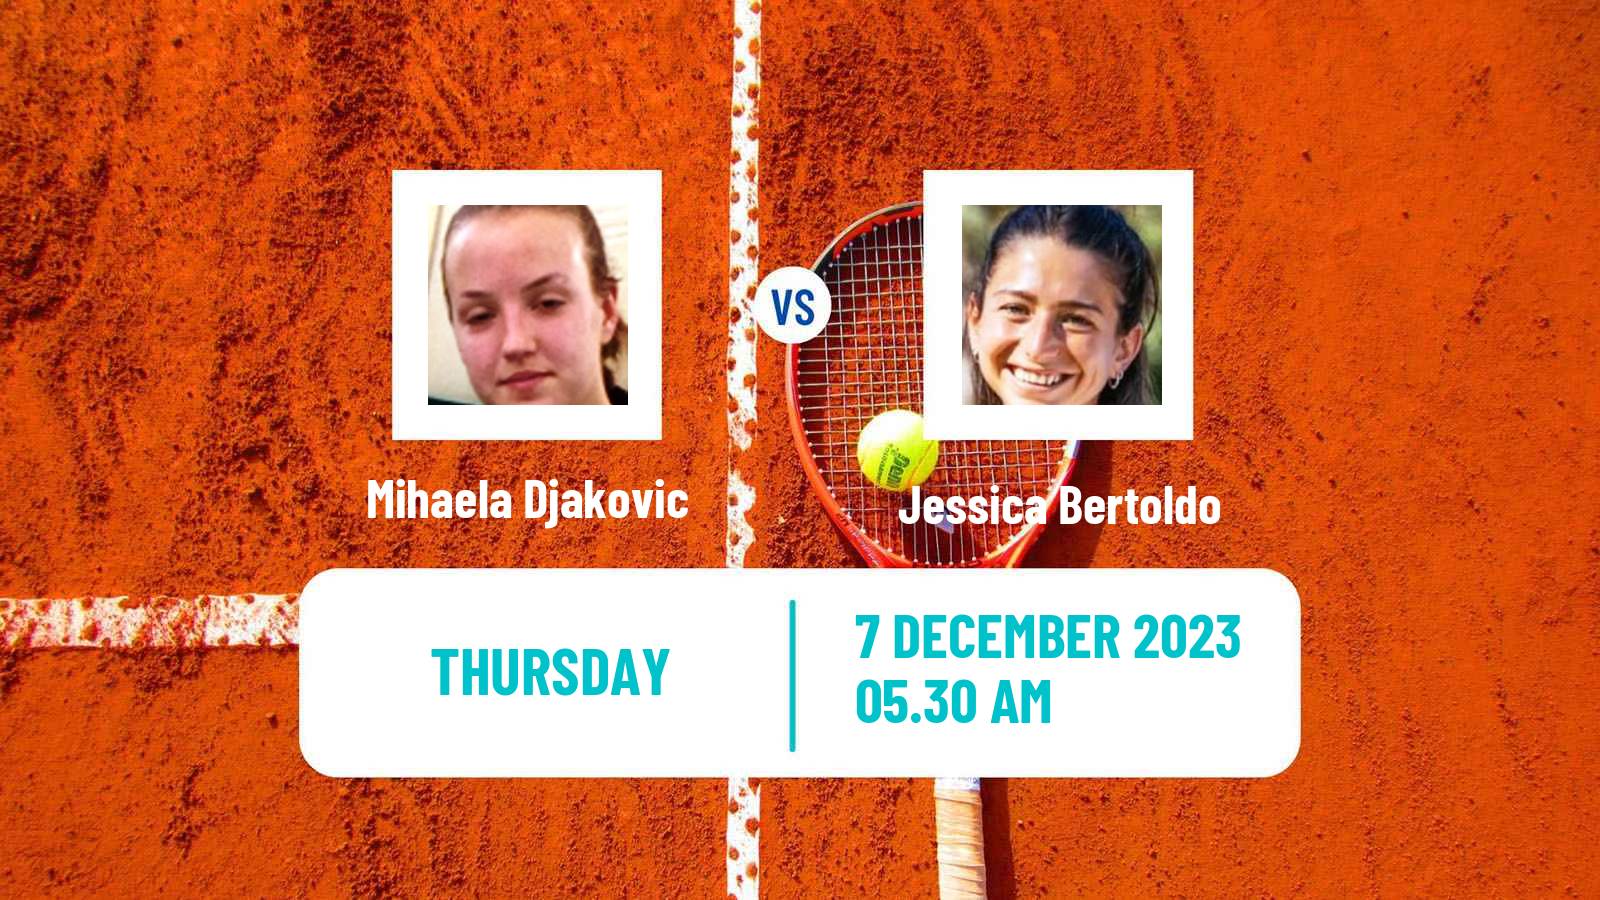 Tennis ITF W15 Valencia 2 Women Mihaela Djakovic - Jessica Bertoldo